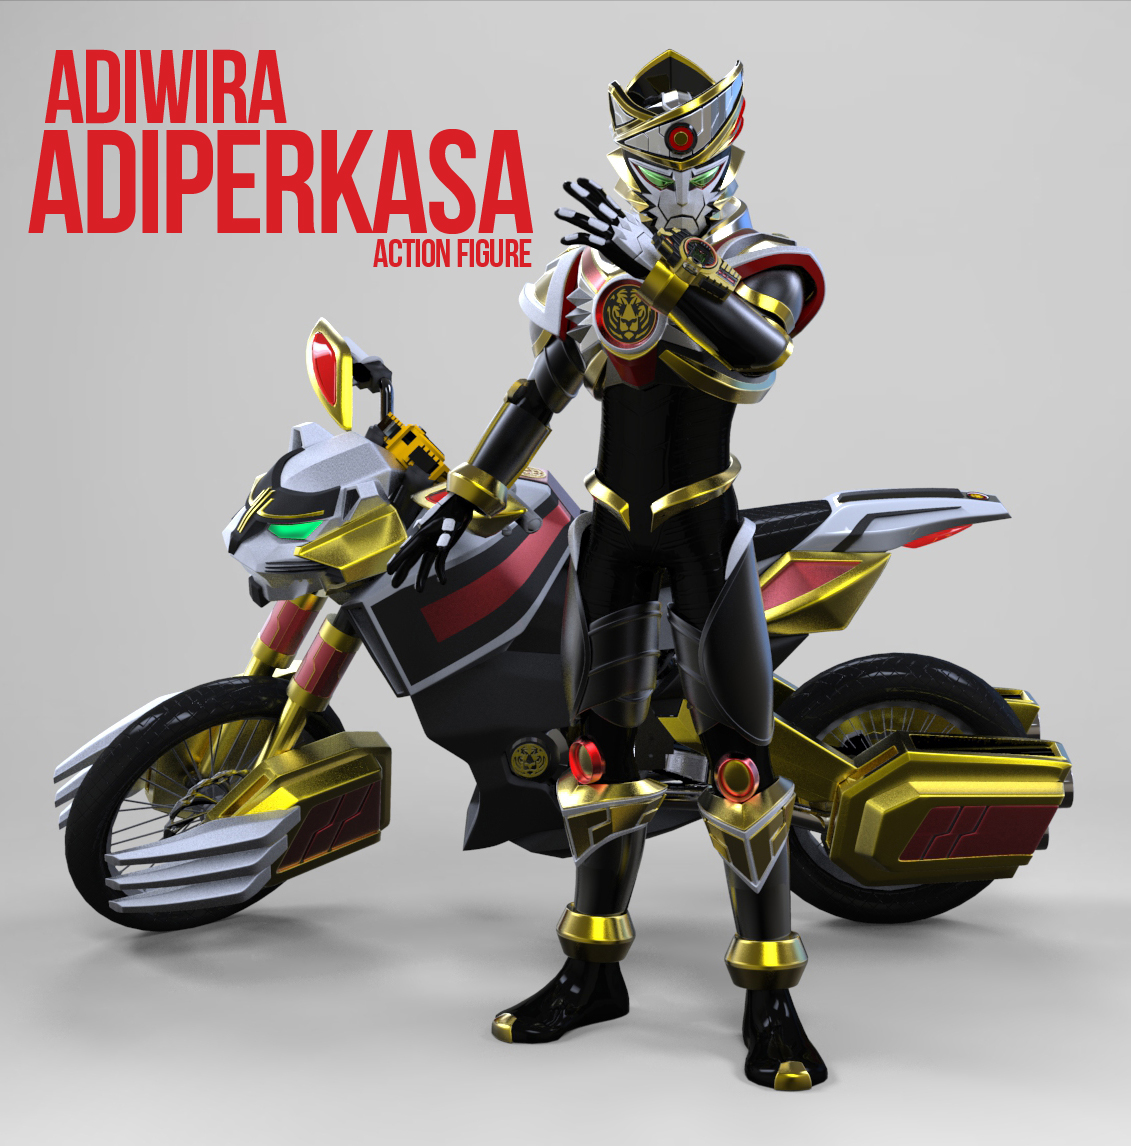 toys figure SuperHero adiwira adiperkasa Armor keris Action Figure Character toy